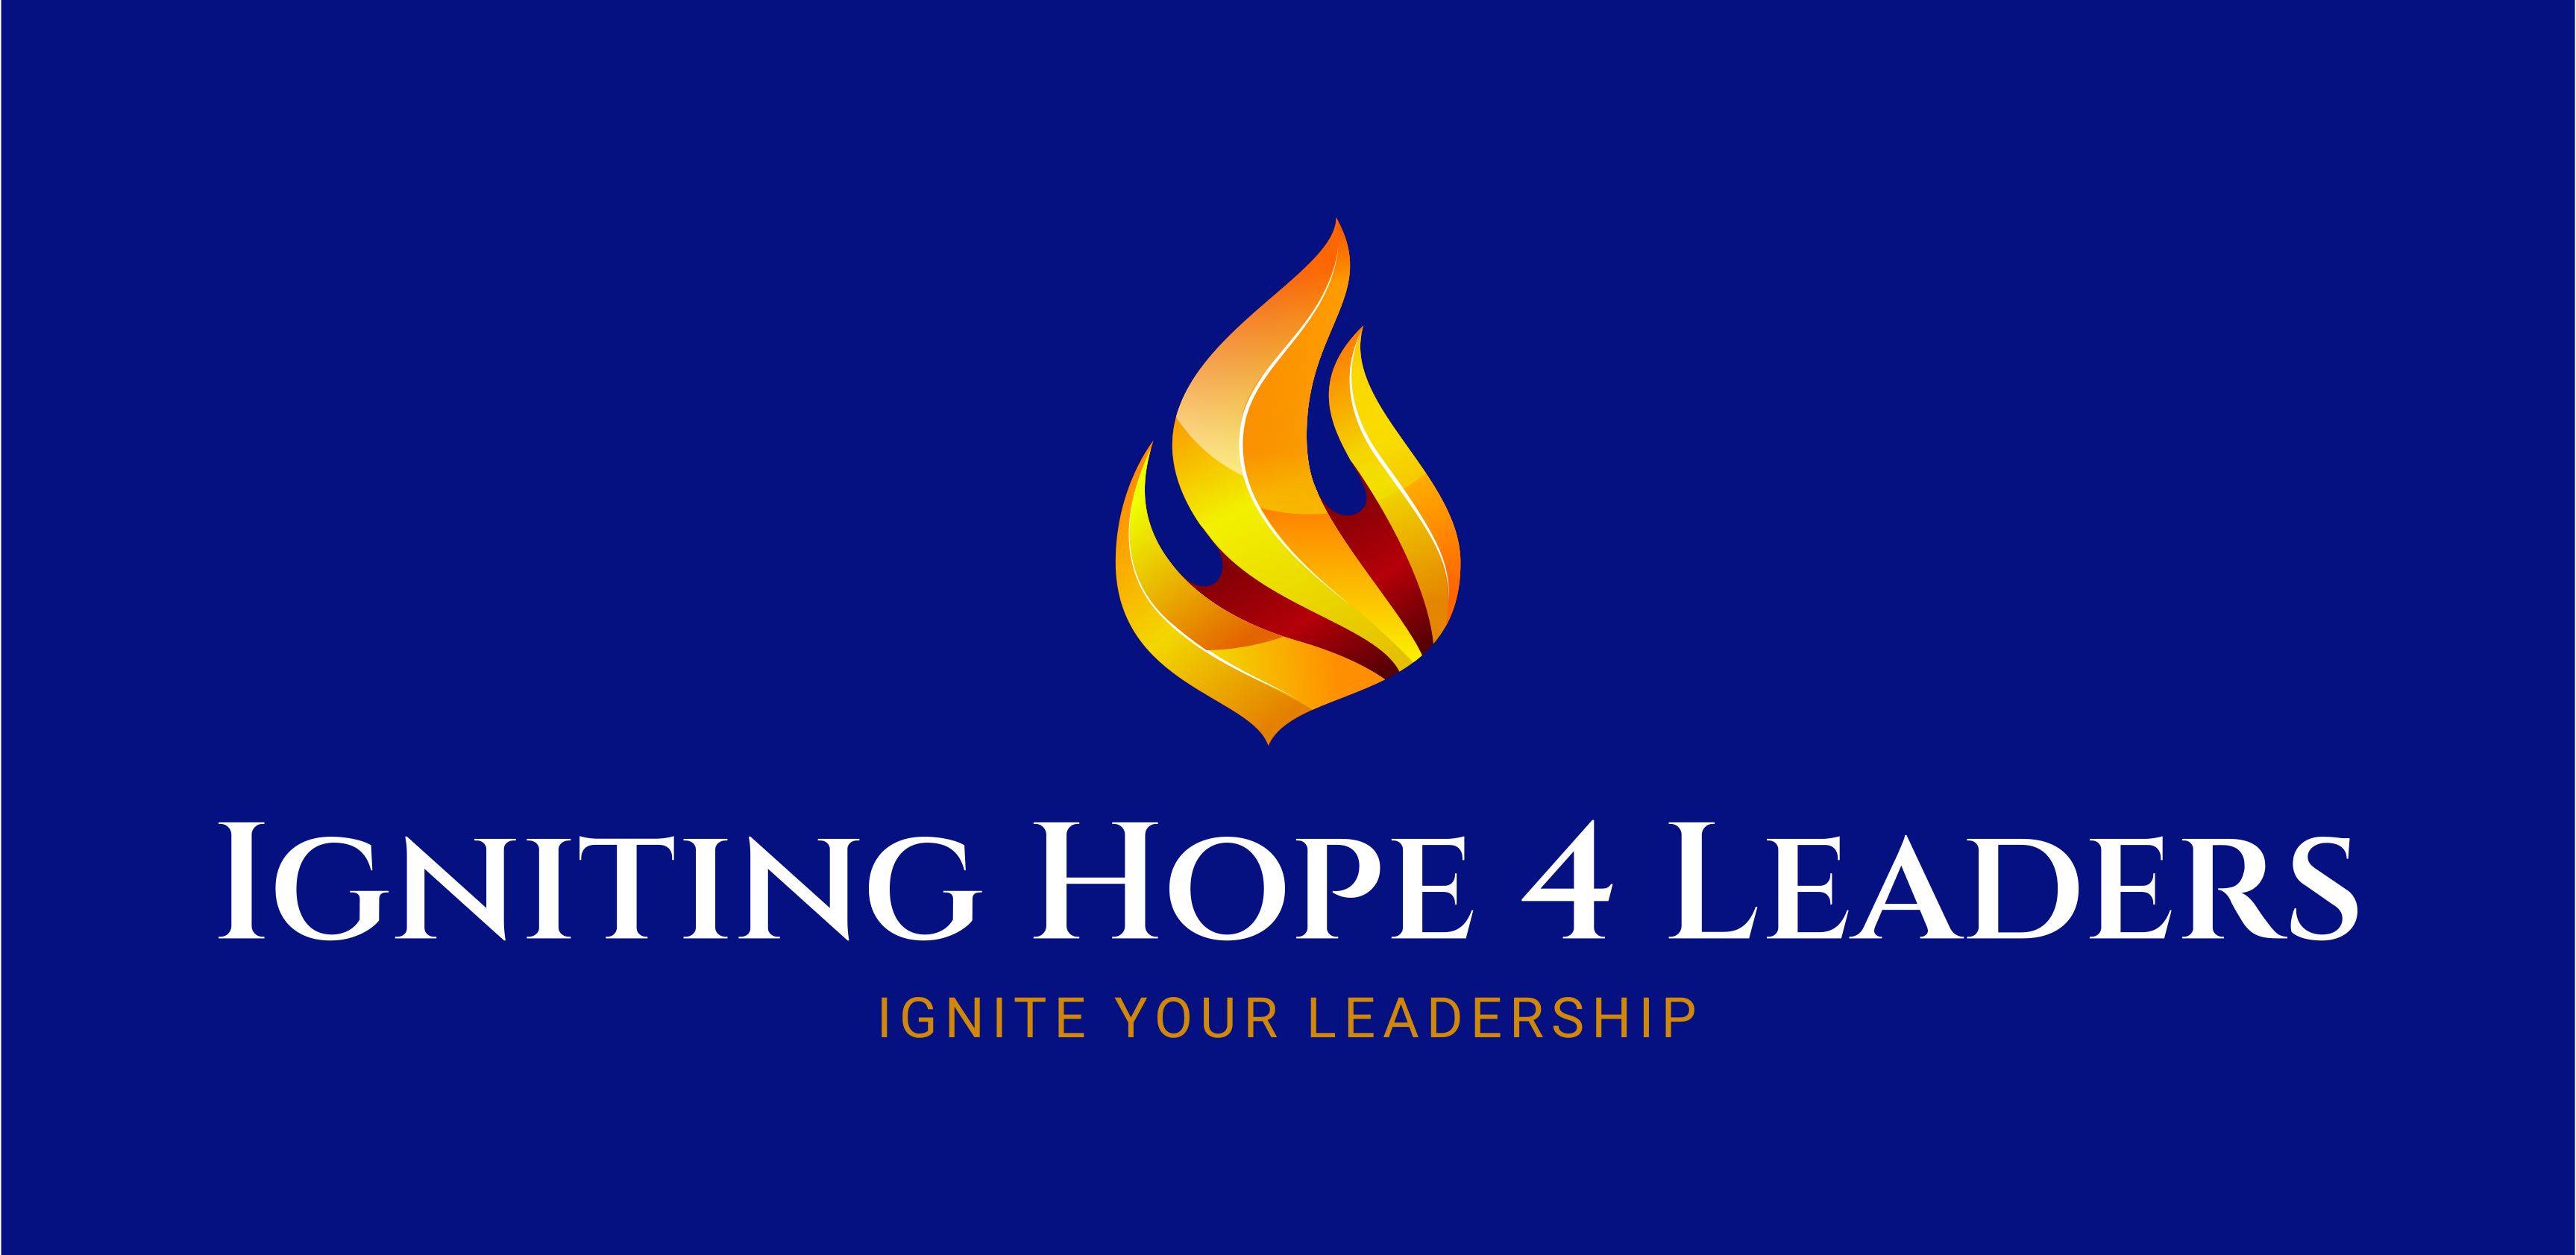 Igniting Hope 4 Leaders